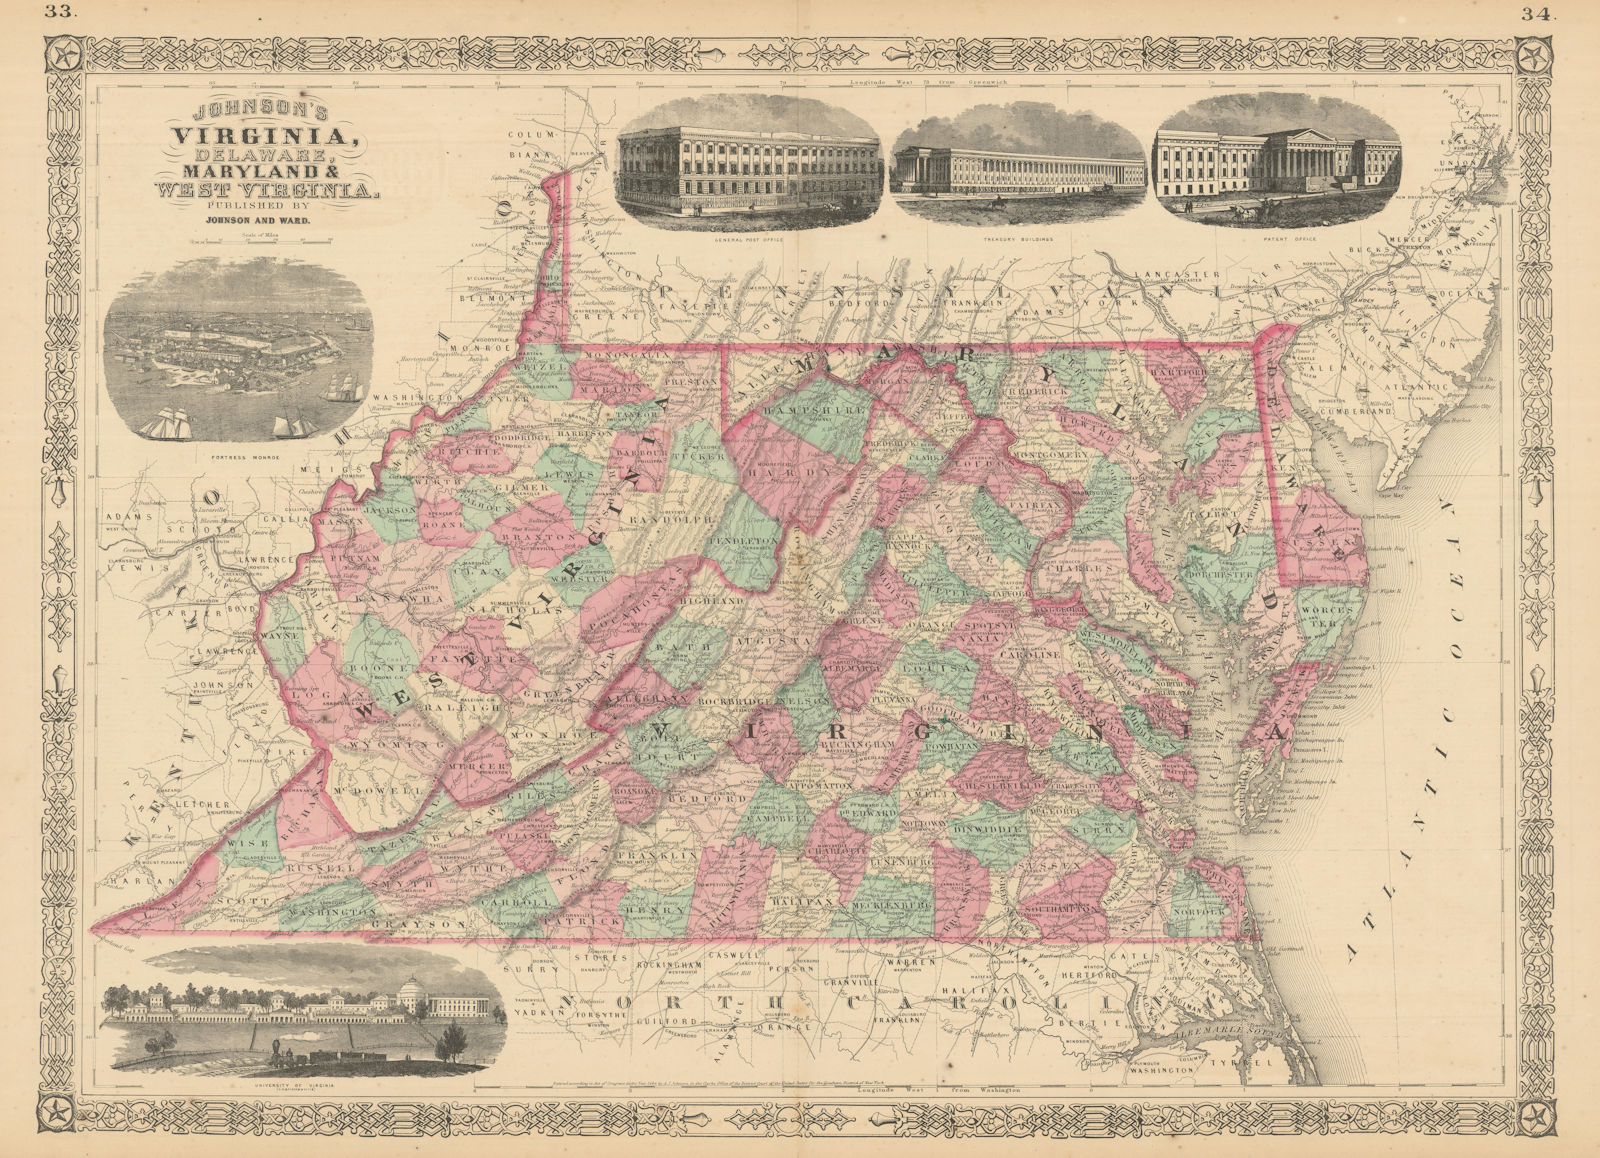 Johnson's Virginia, Delaware, Maryland & West Virginia. Counties 1866 old map